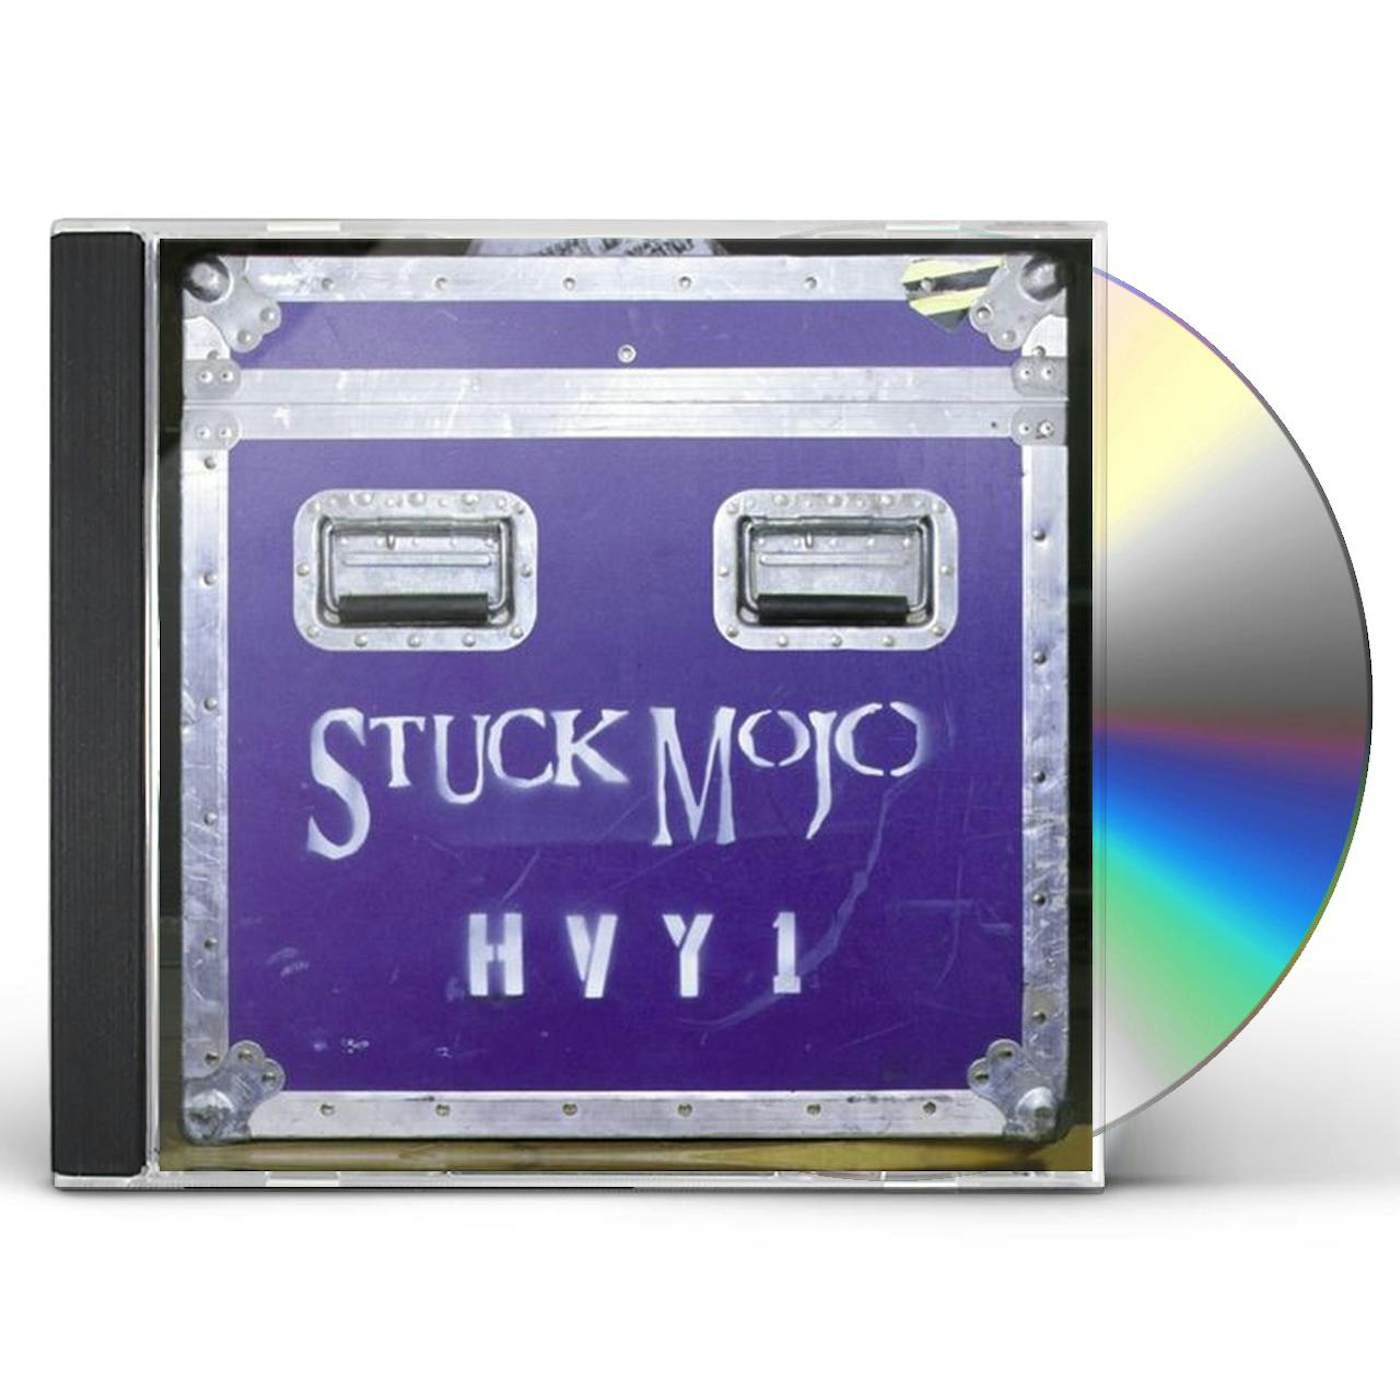 Stuck Mojo HVY1 CD